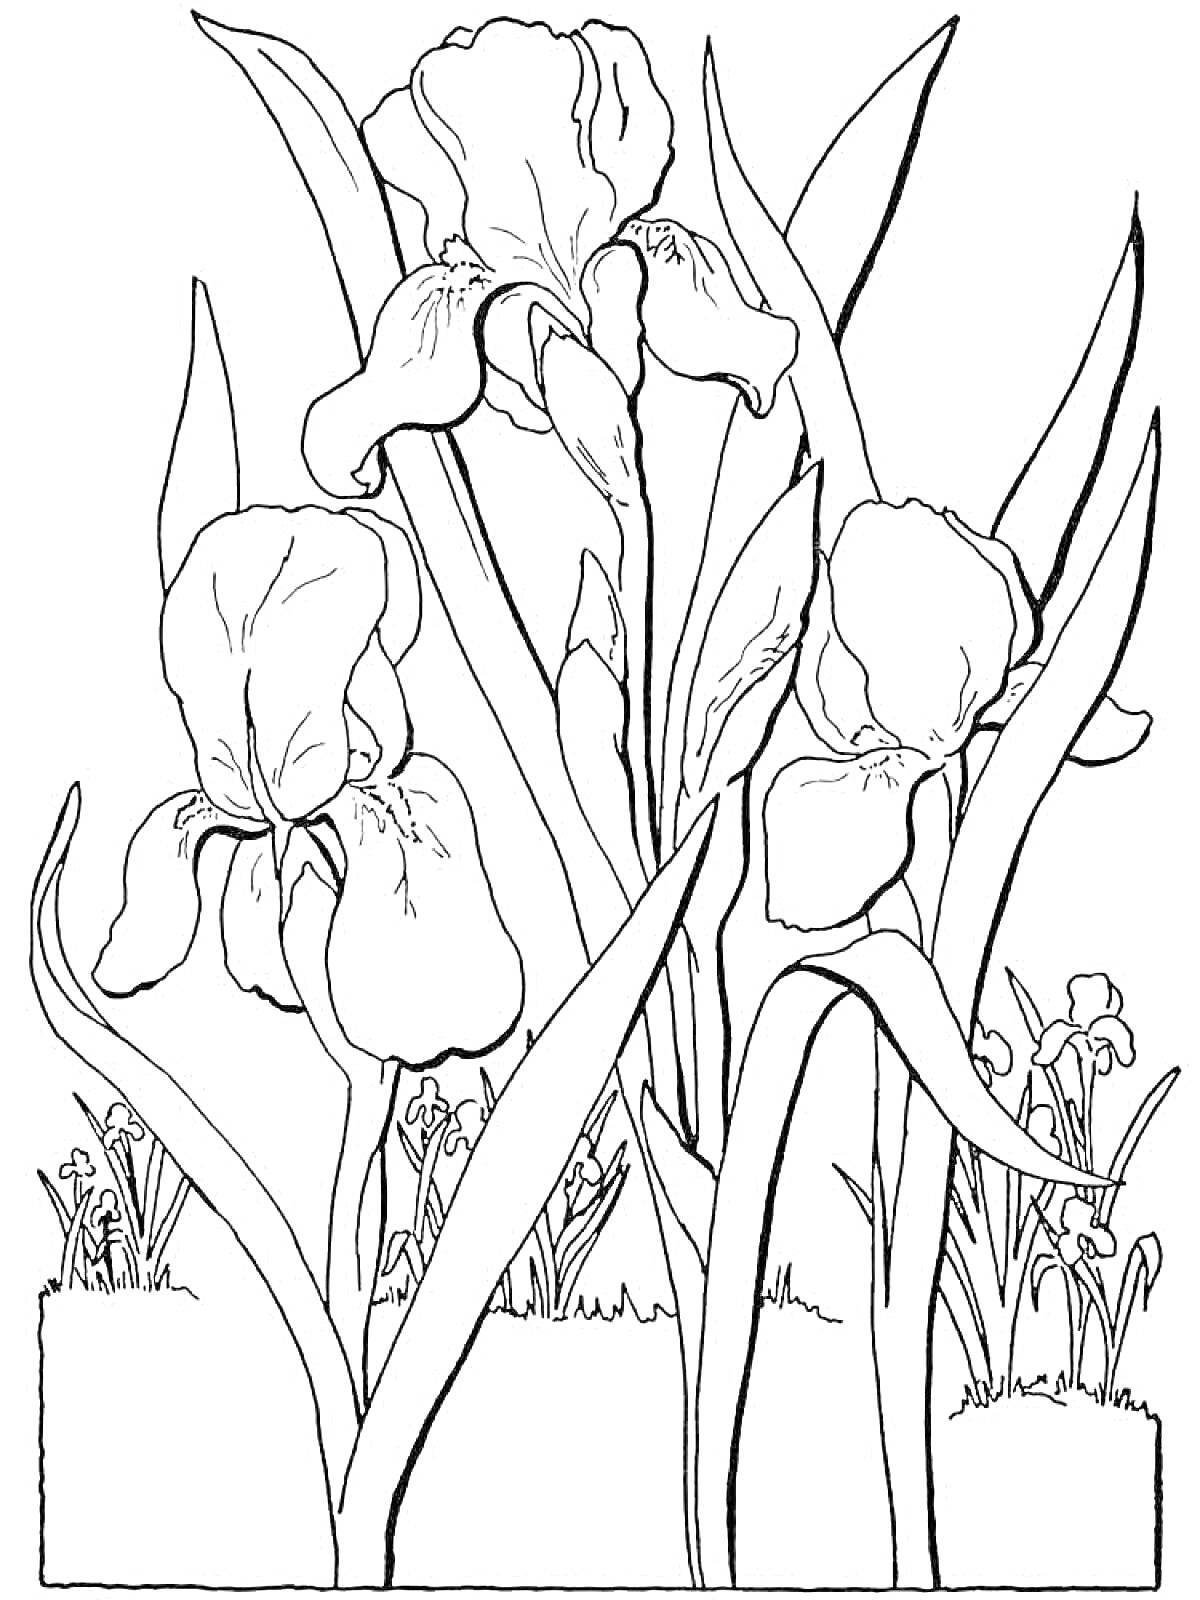 Раскраска Три ириса, листья, трава и более мелкие цветы ириса на заднем плане